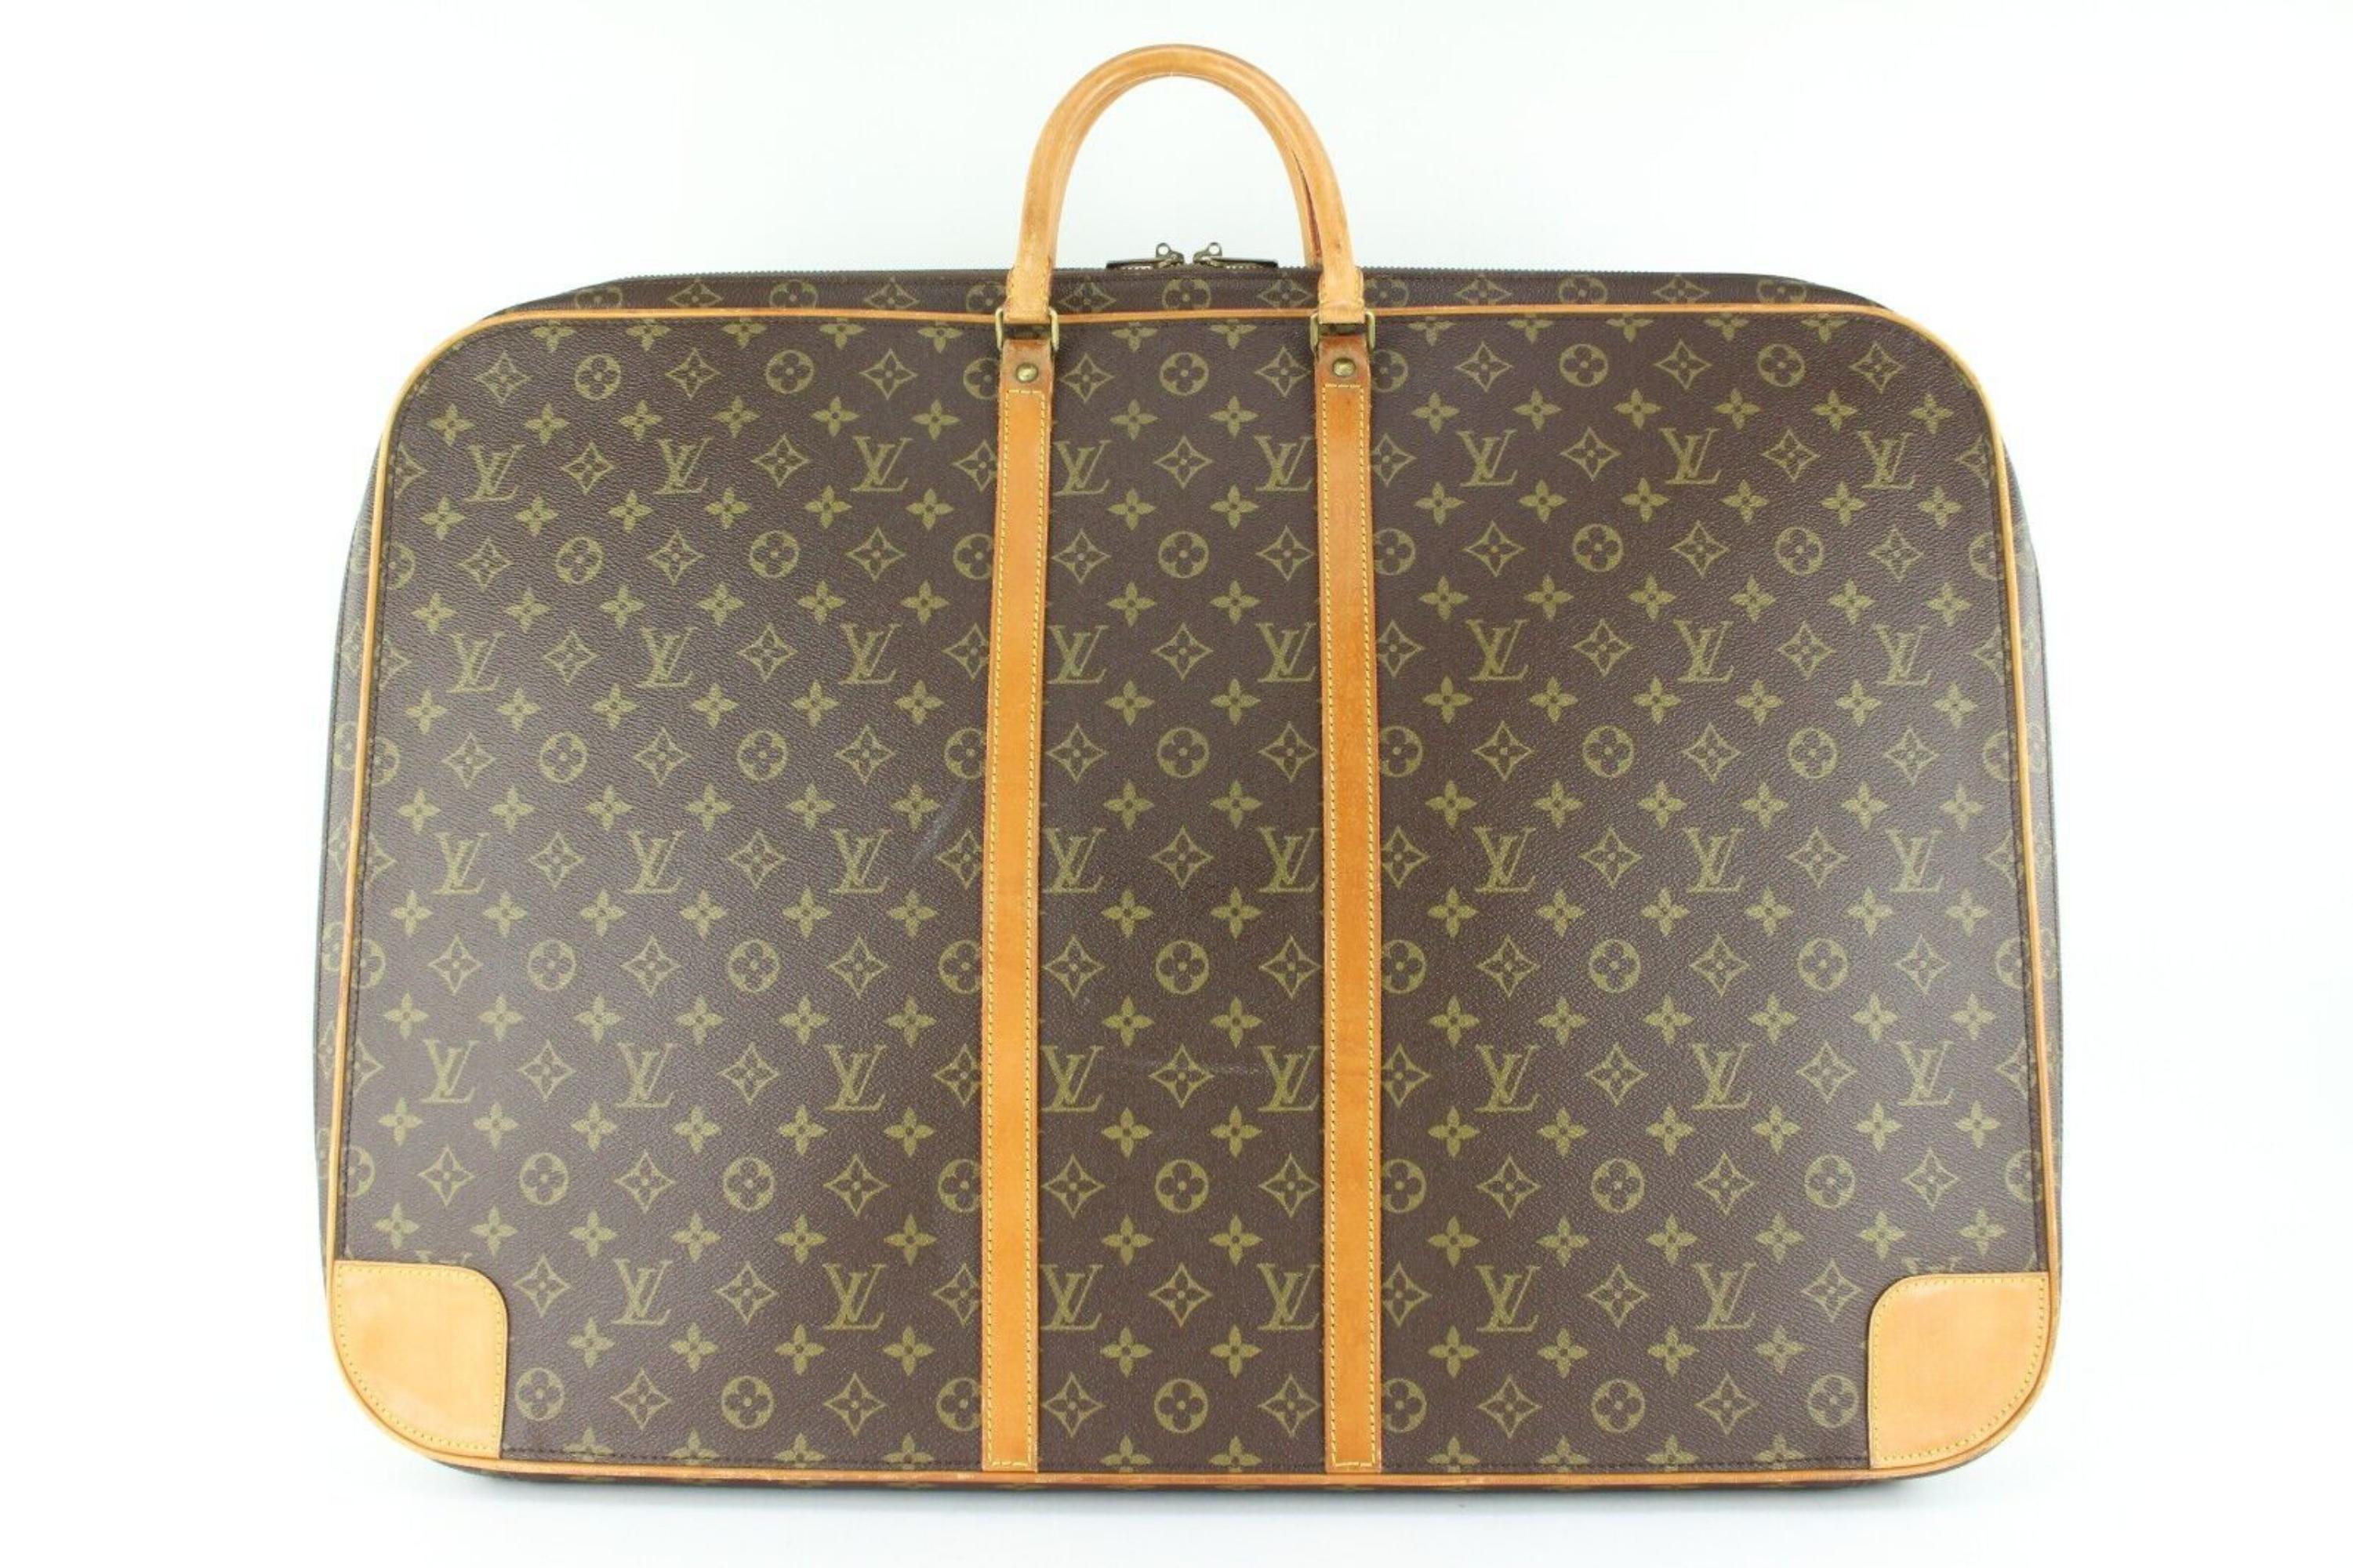 Brown Louis Vuitton Rare Monogram Artwork Canvas Portfolio Suitcase Luggage 1LVJ0119 For Sale